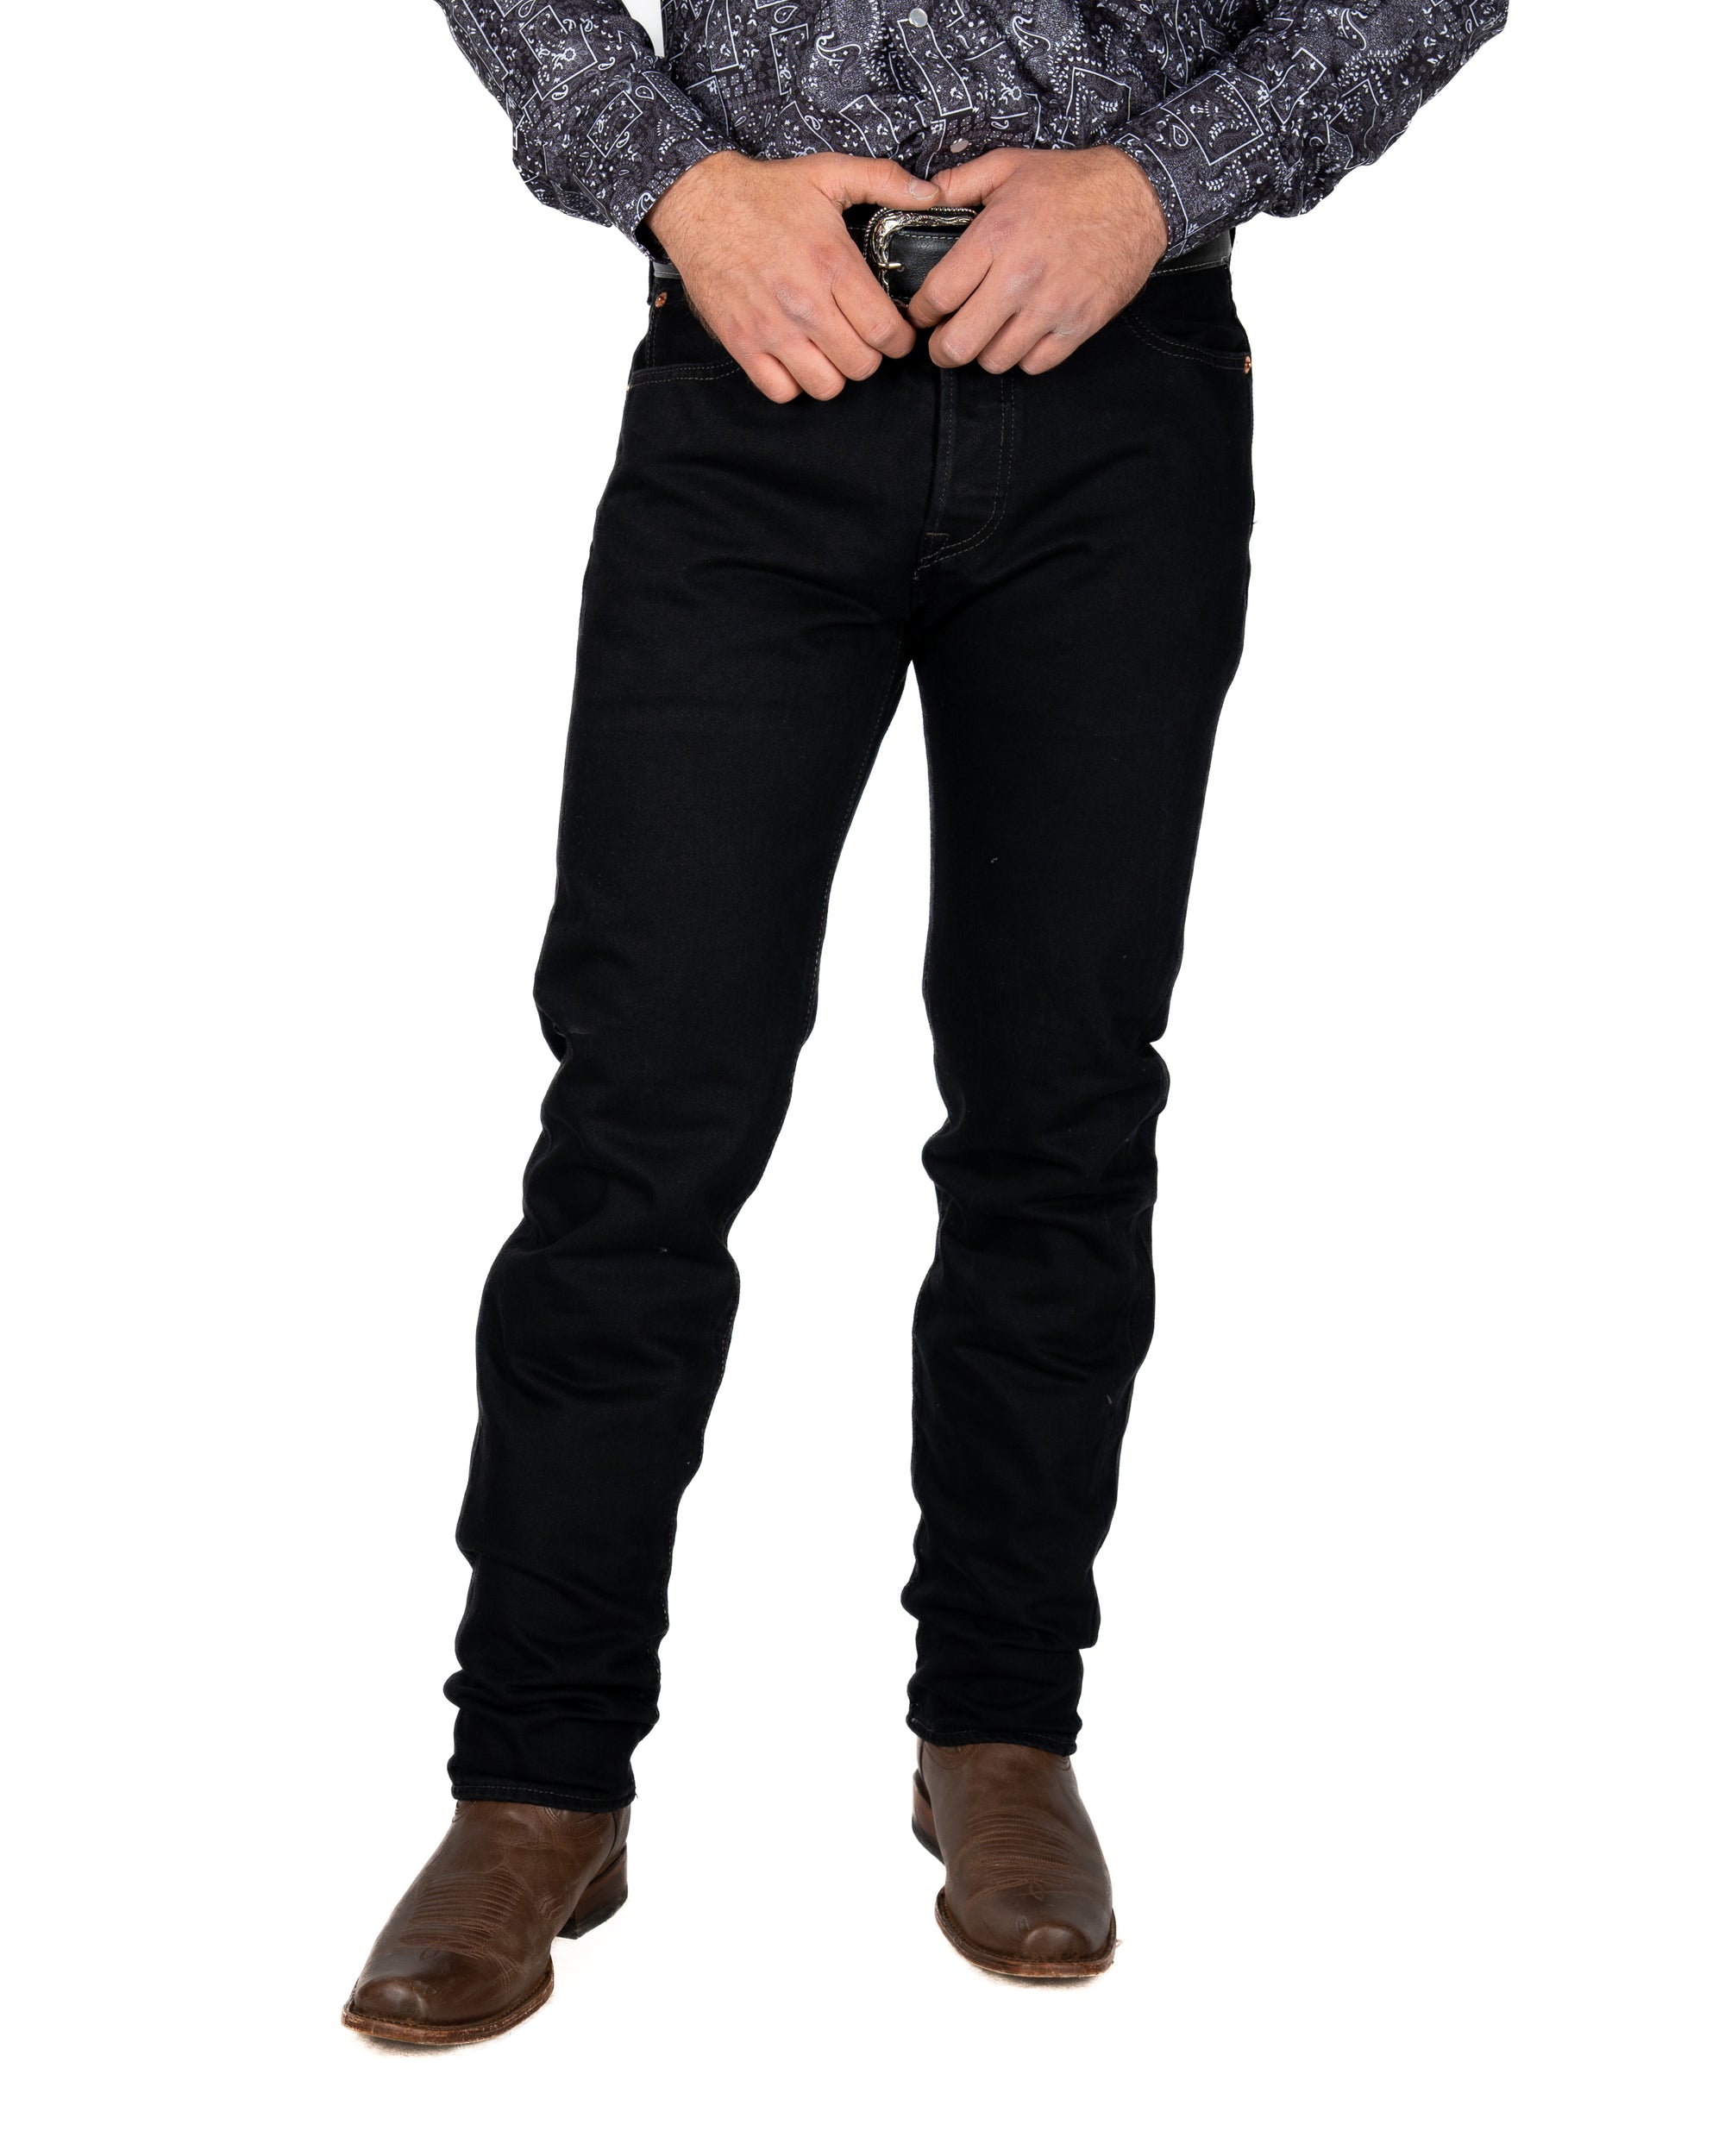 Jeans Levis 501 Negro Caballero